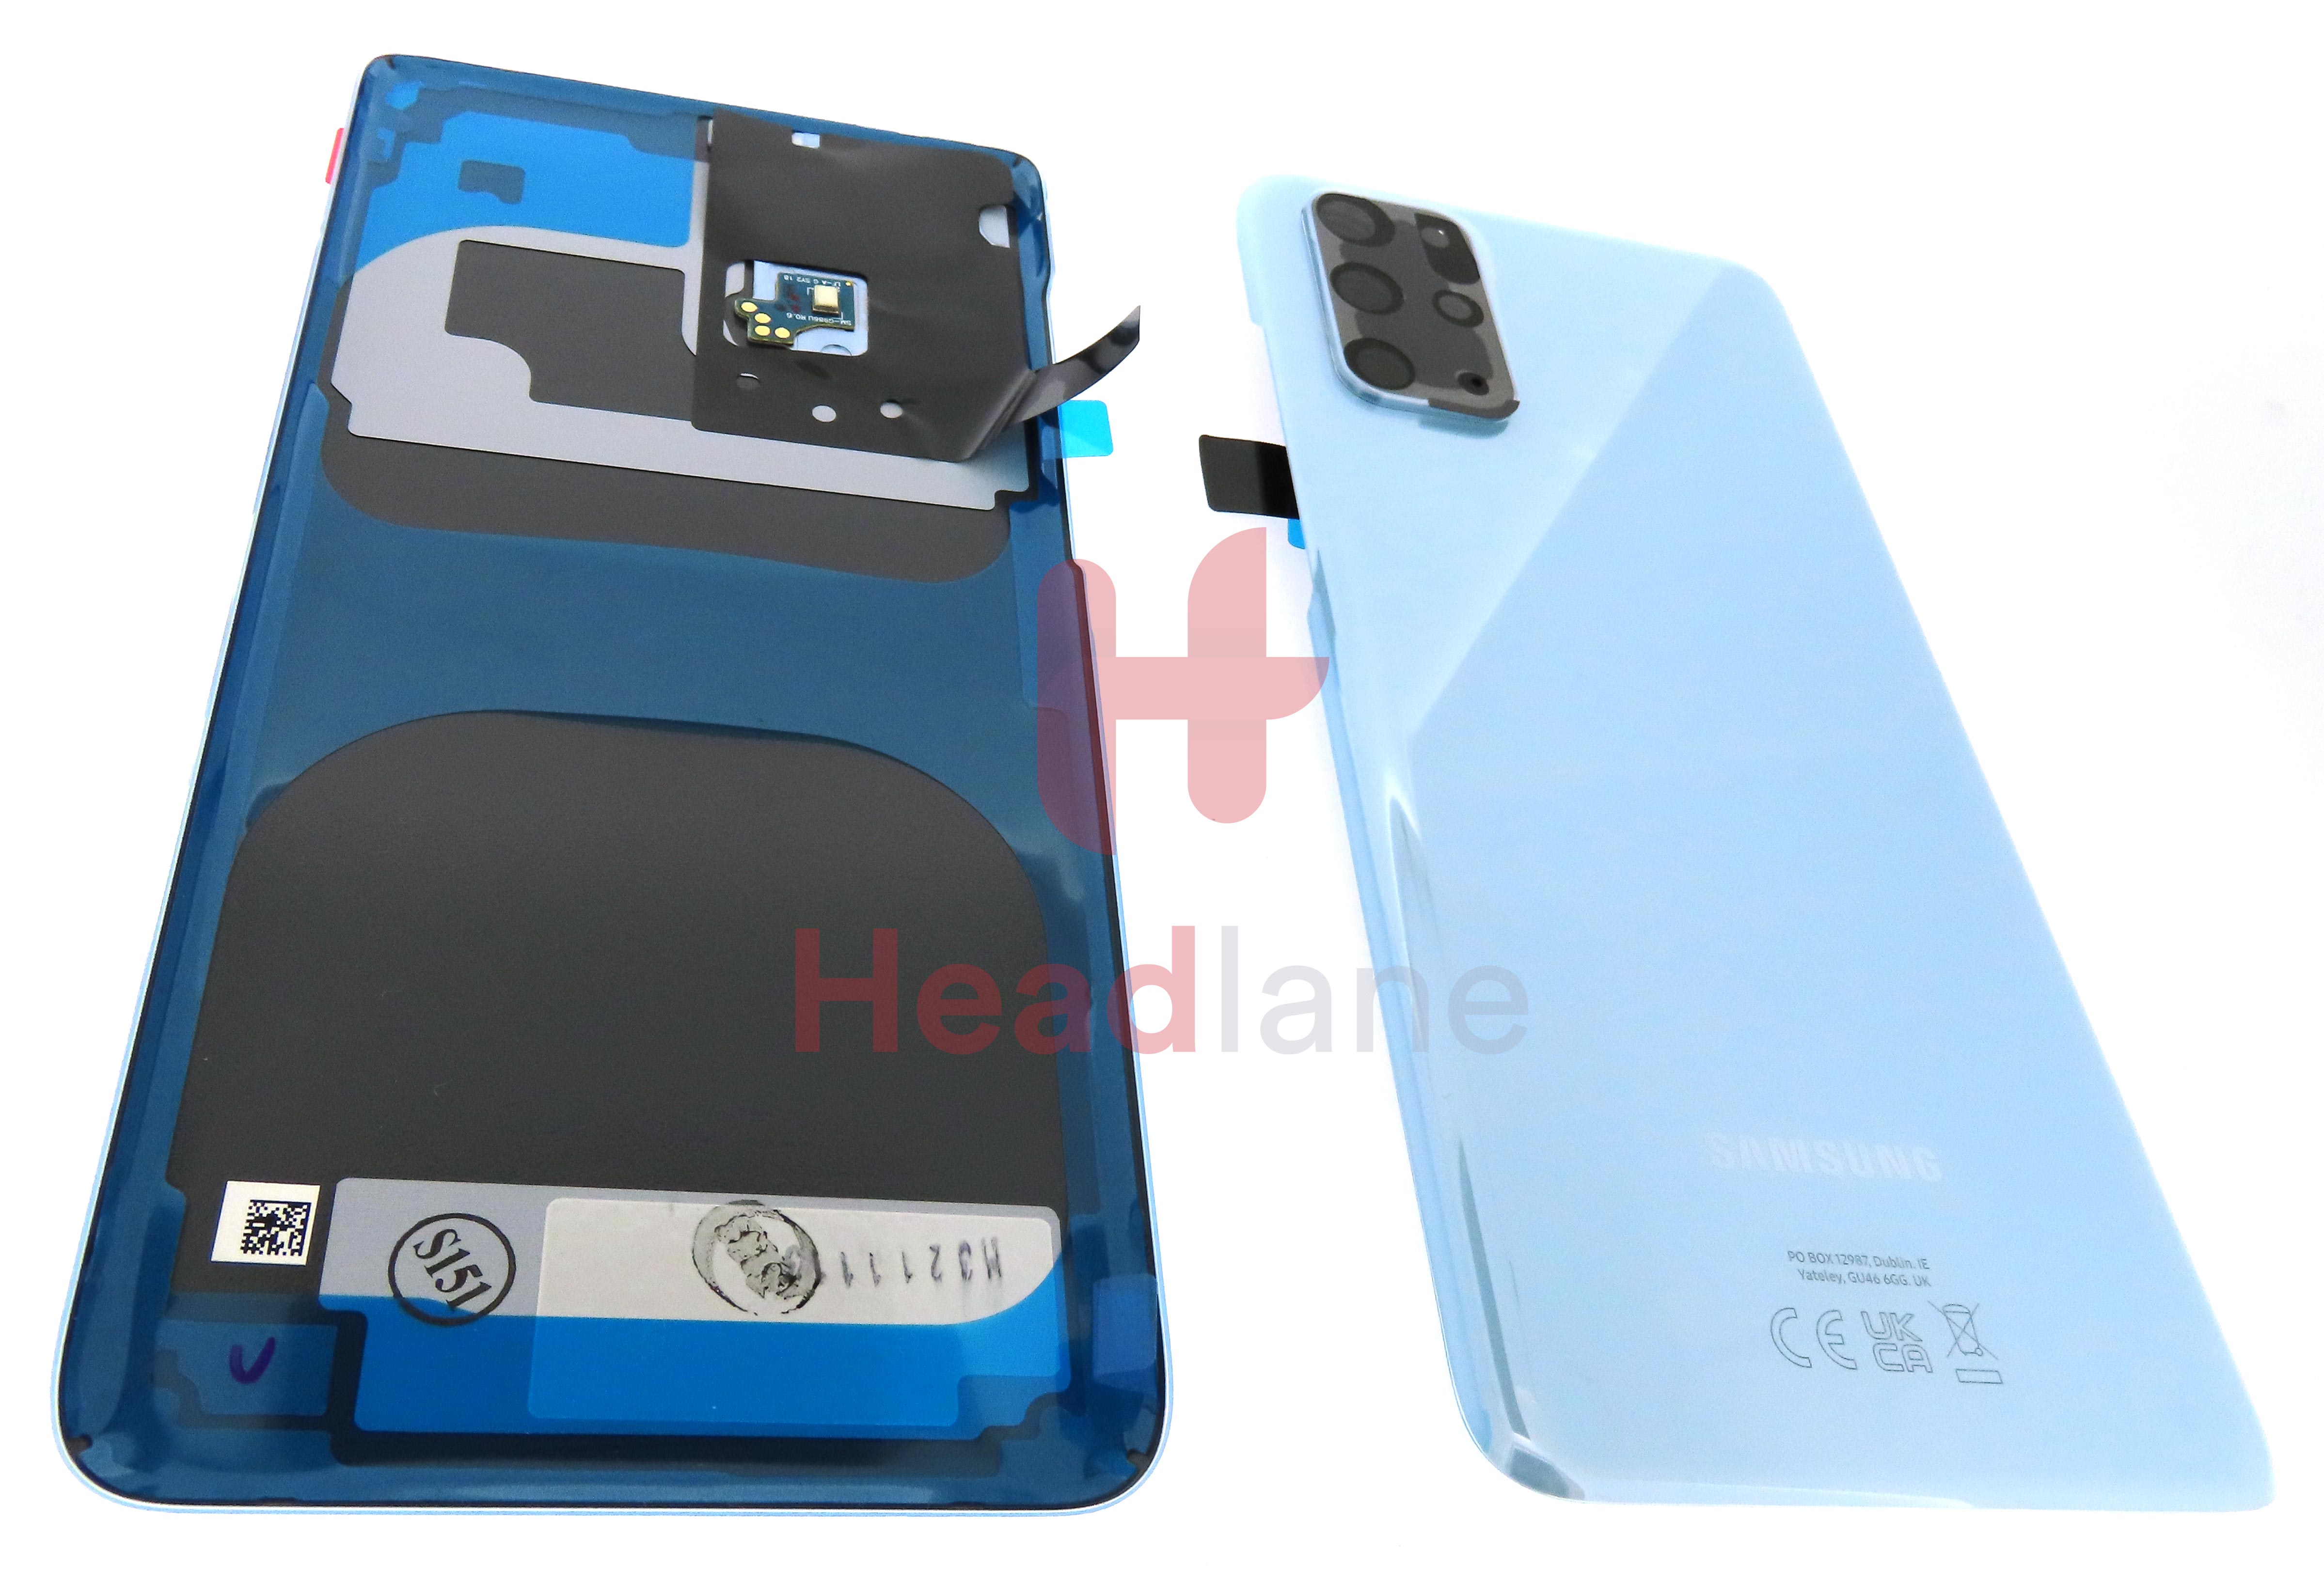 Samsung SM-G986 Galaxy S20+ / S20 Plus Back / Battery Cover - Cloud Blue (UKCA)